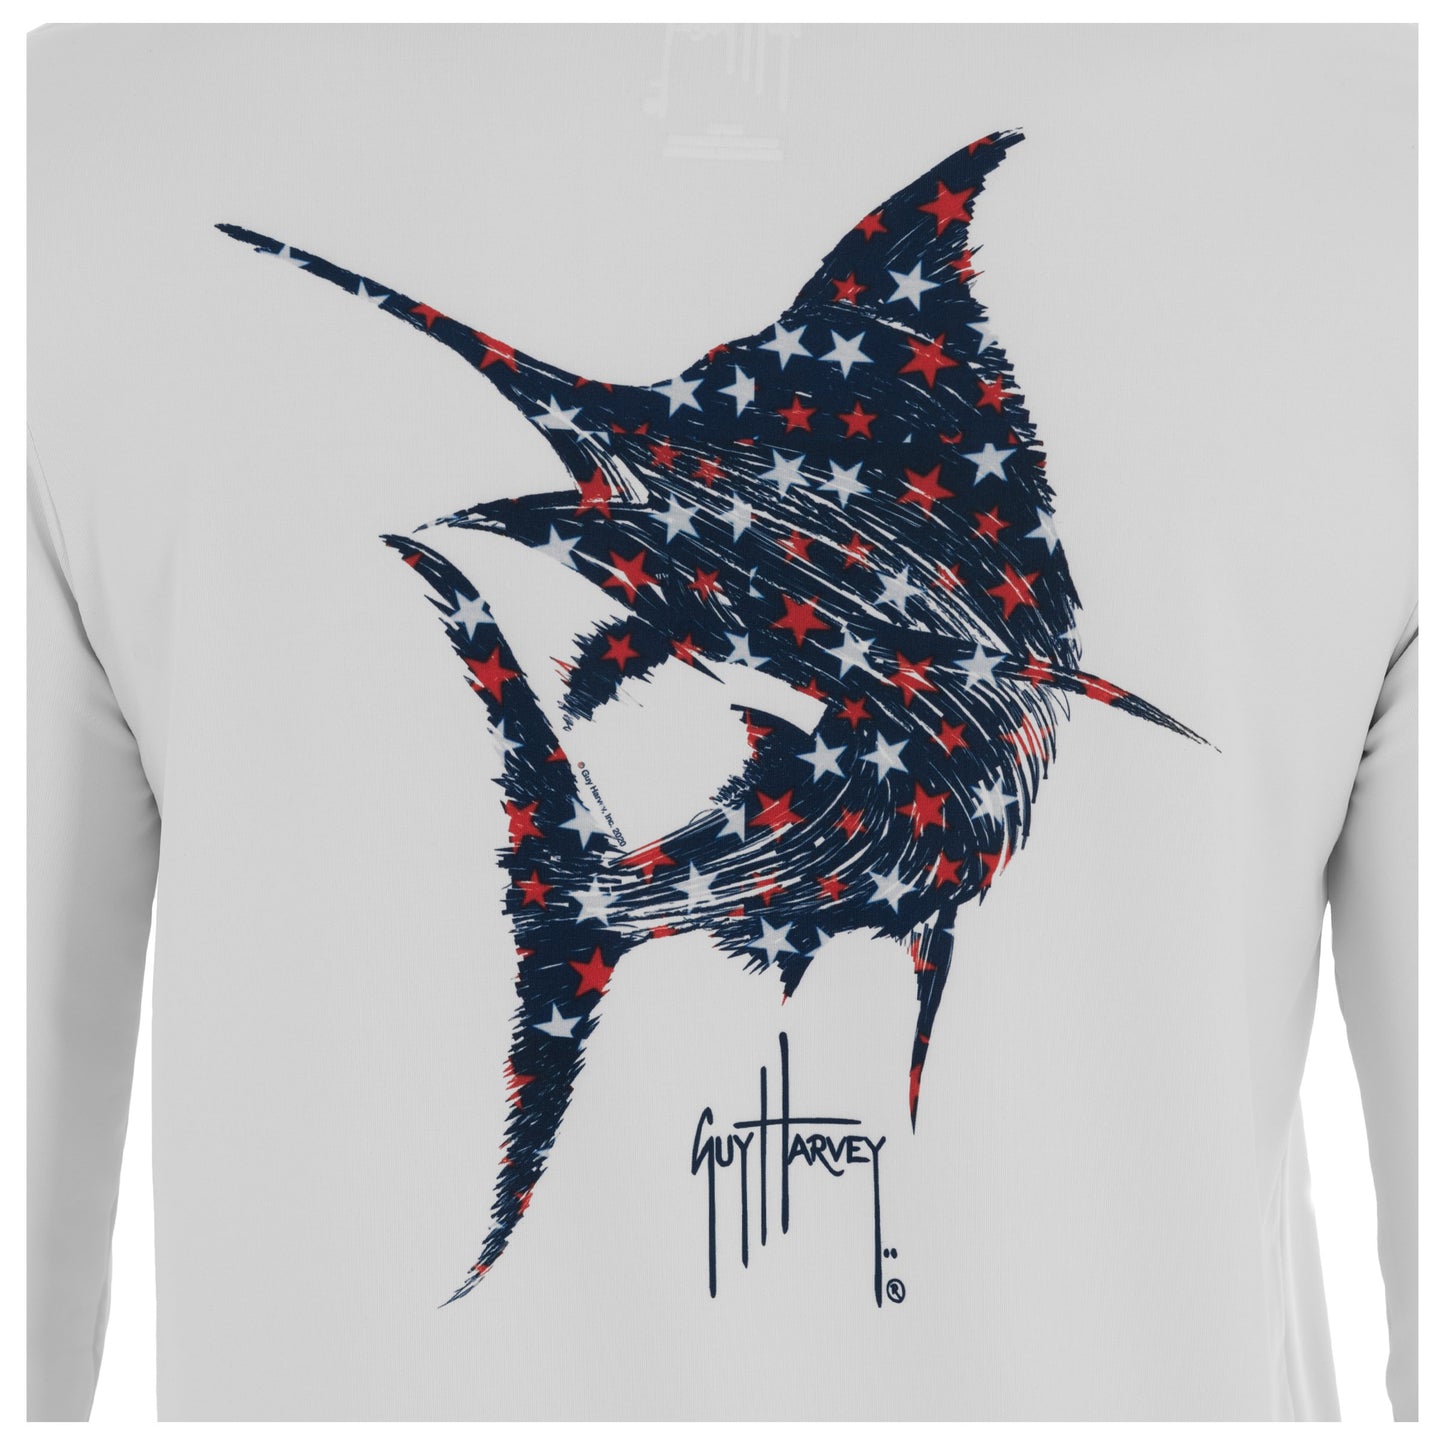 Men's Scribble Marlin Performance Fishing Shirt